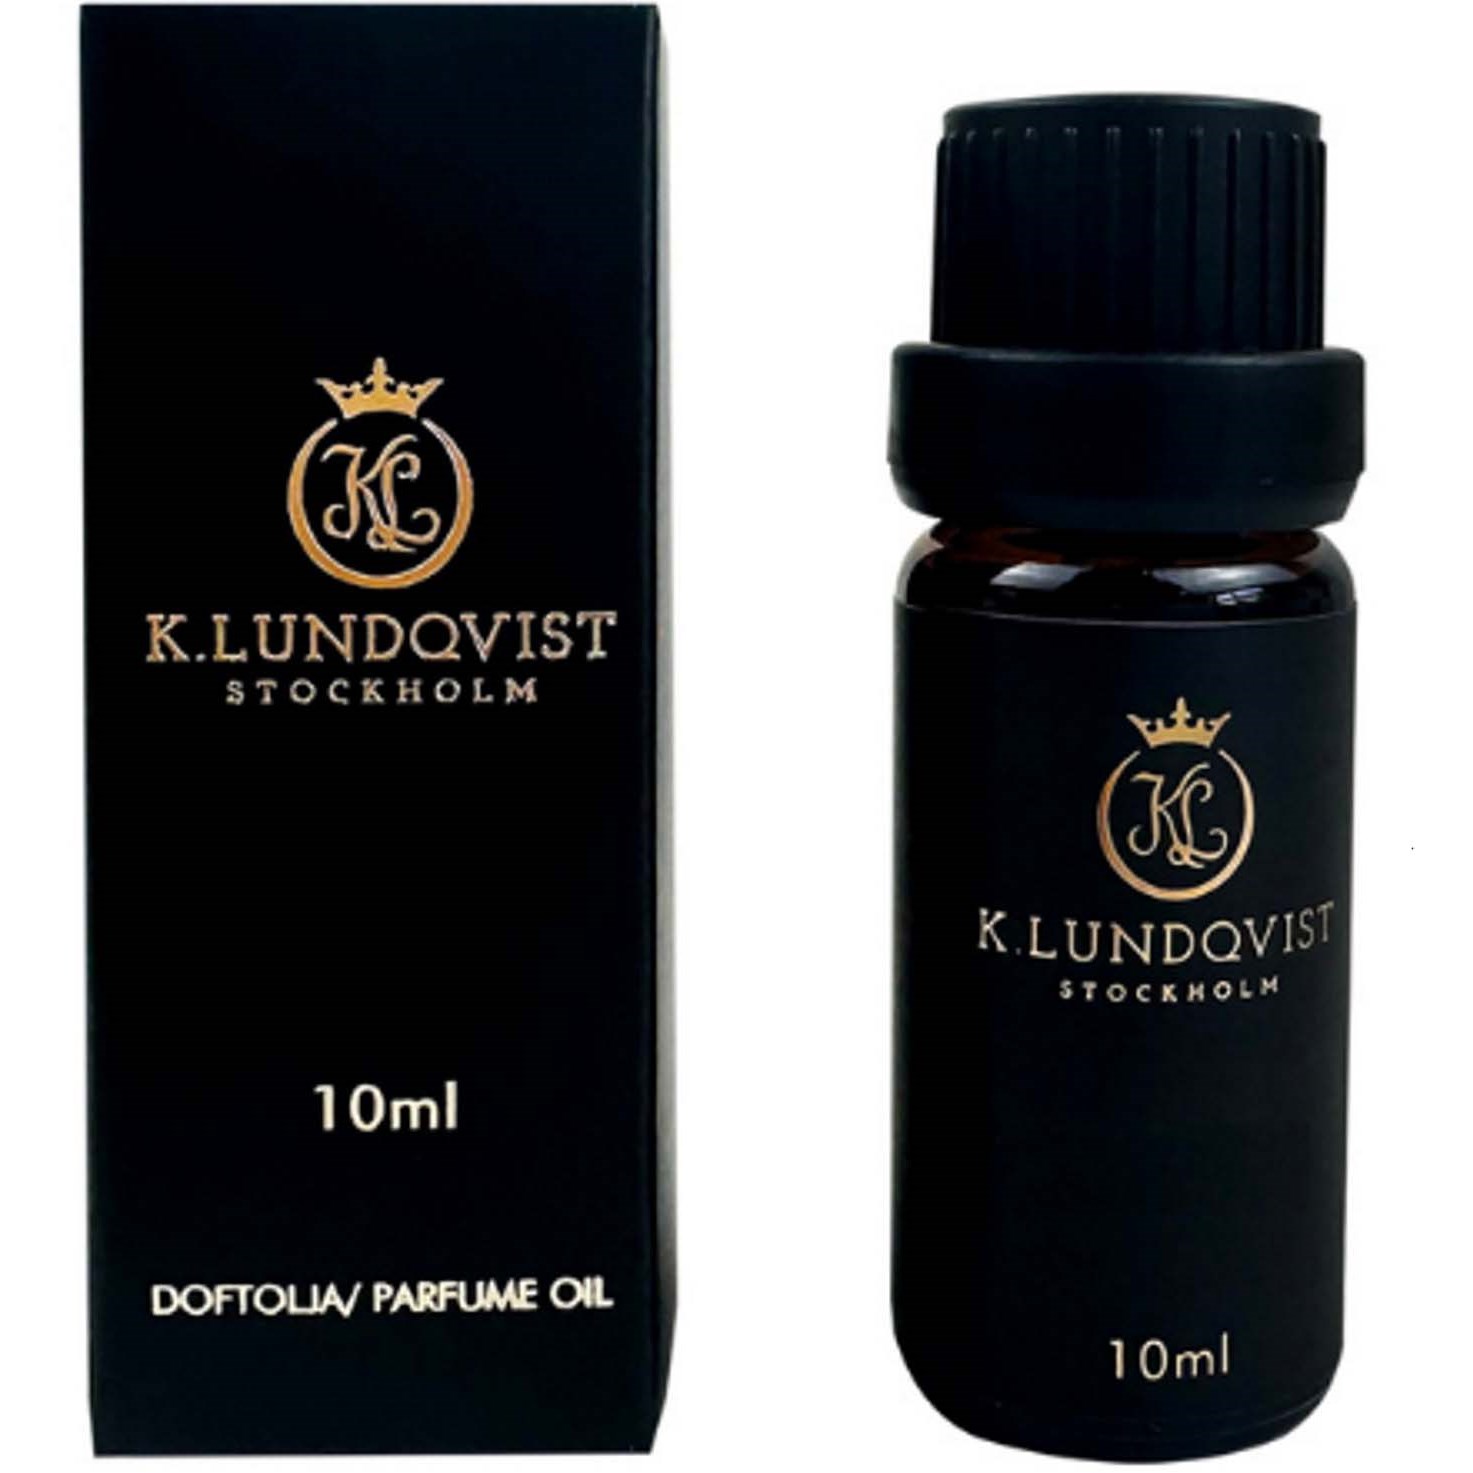 K. Lundqvist Stockholm Perfume Oil Boulevard/Raspberry & Blueberry 10